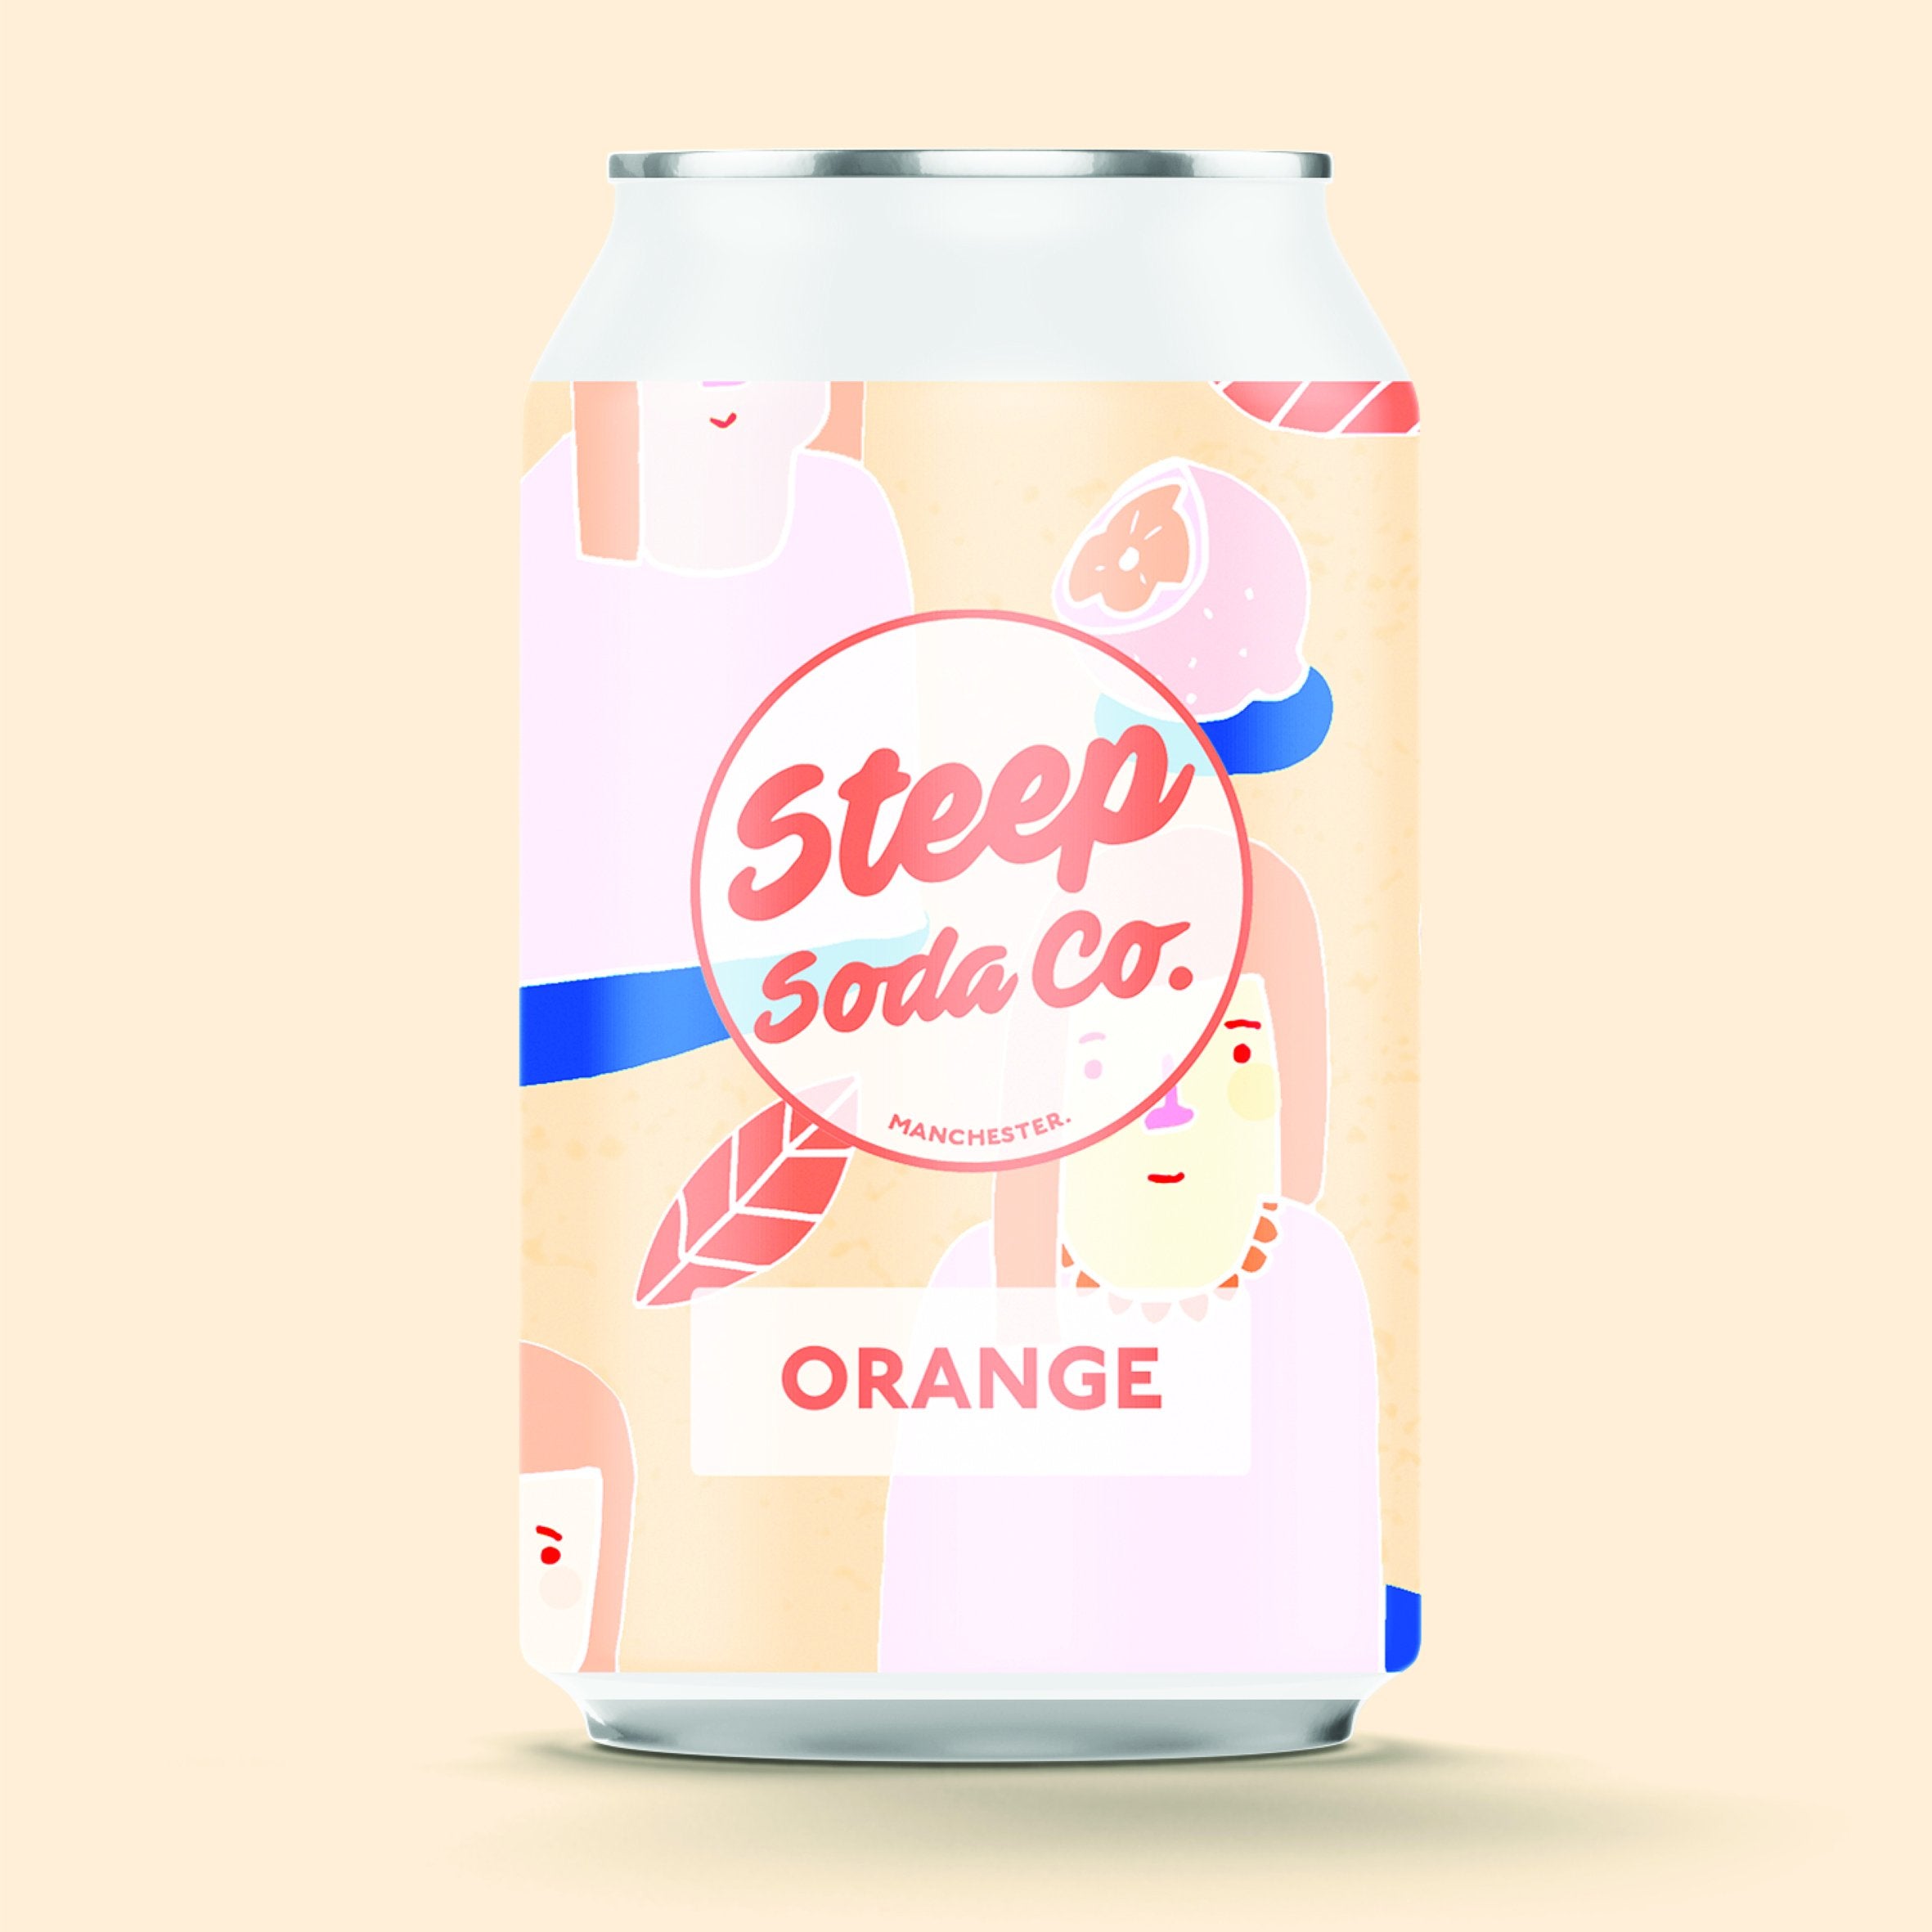 Steep Soda Co - Orange // Stores Supply // Steep Soda Co